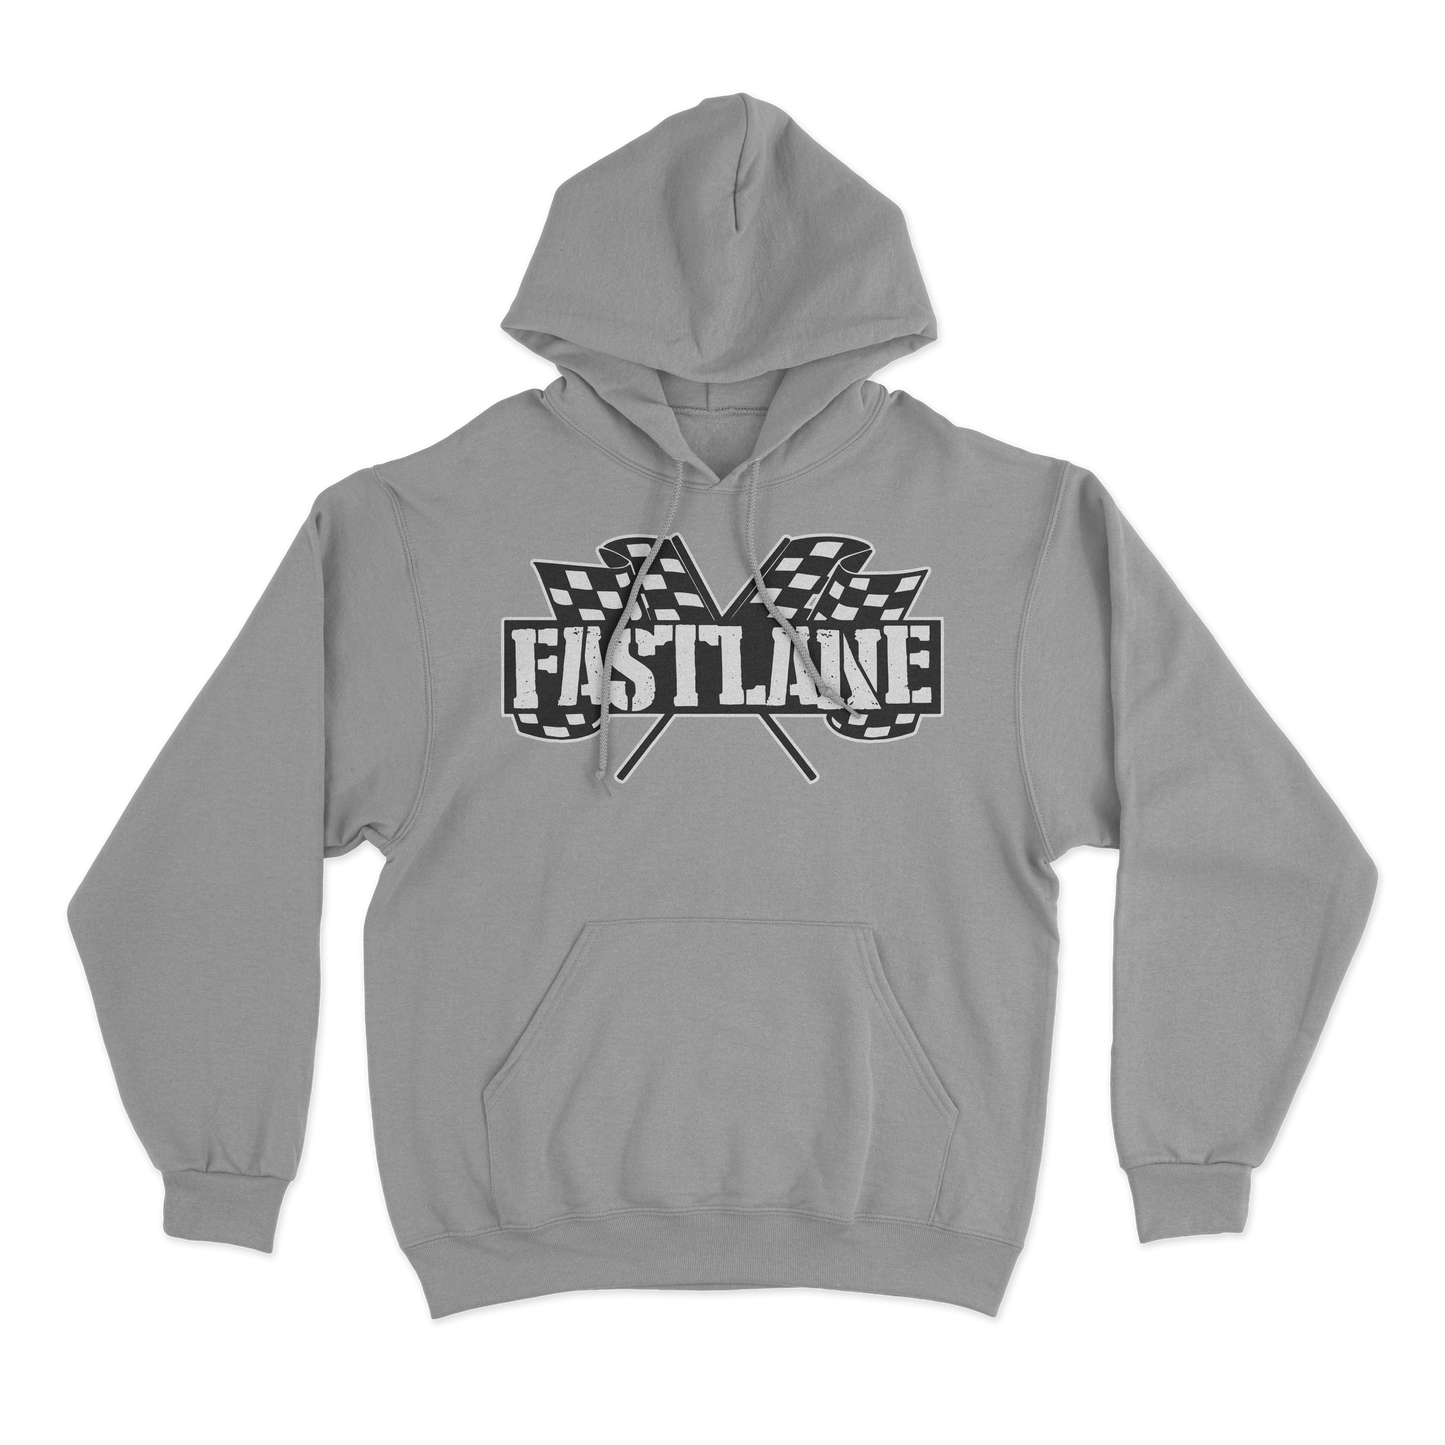 Fastlane Logo Hoodie (Big Patch)